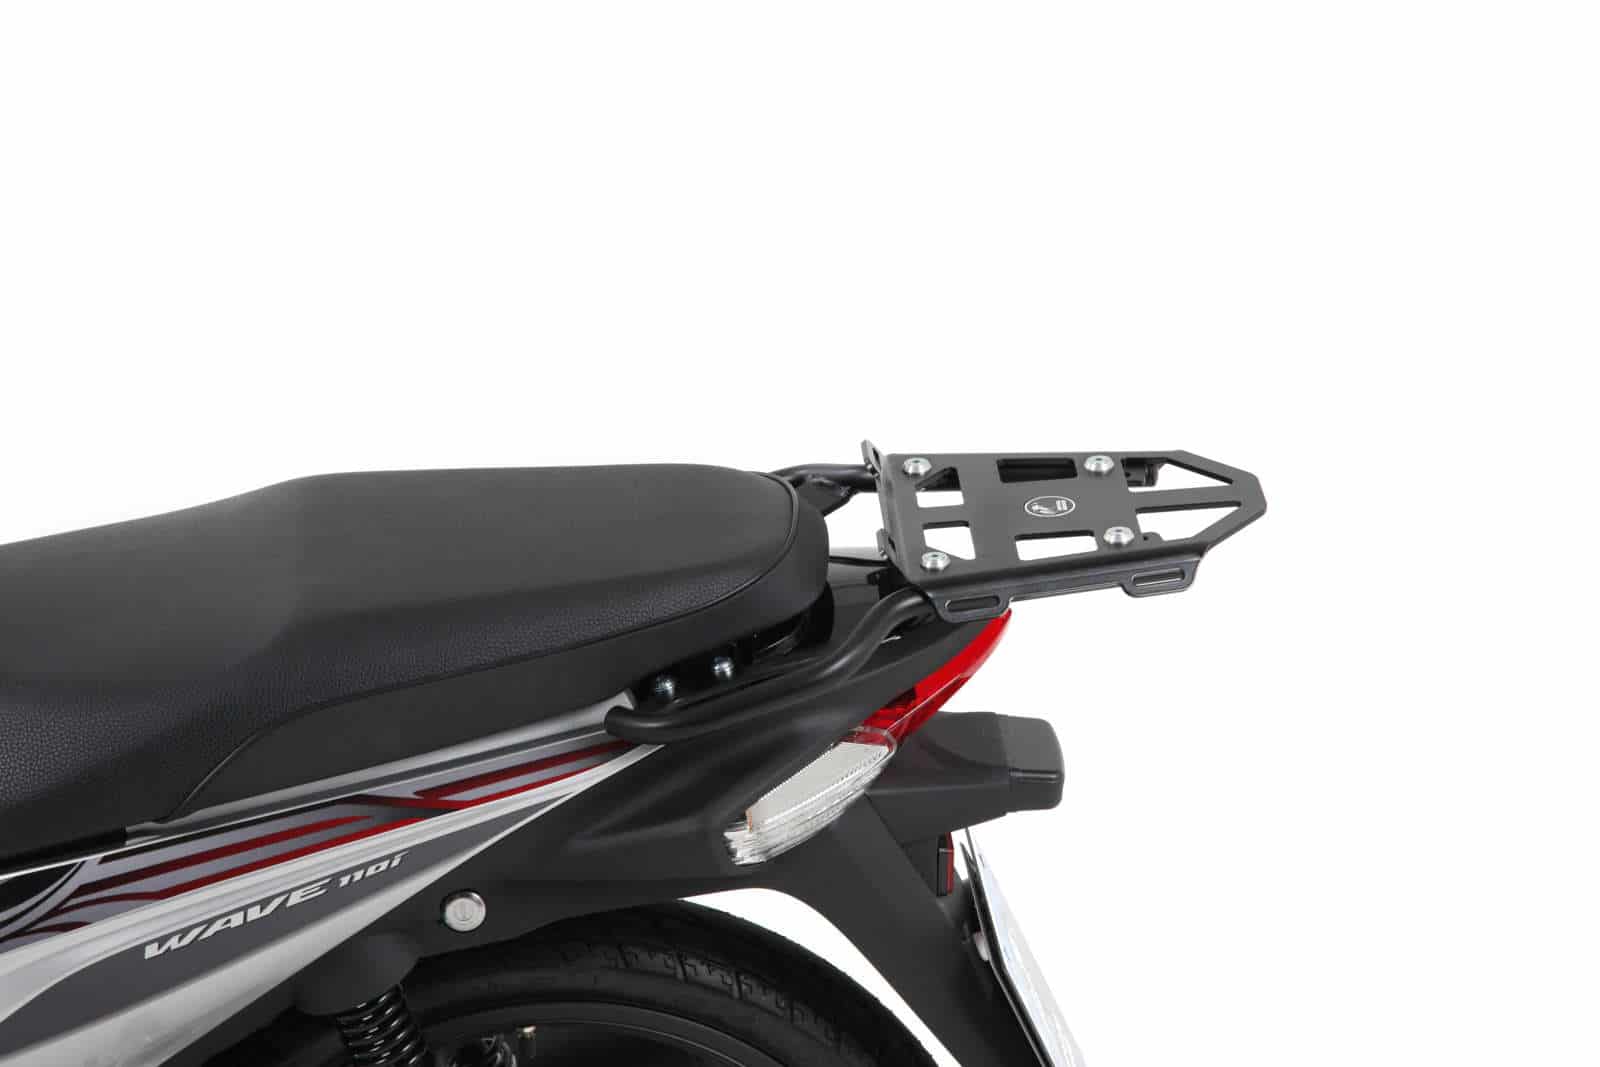 Minirack soft luggage rear rack for Honda Wave 110 i (2012-)